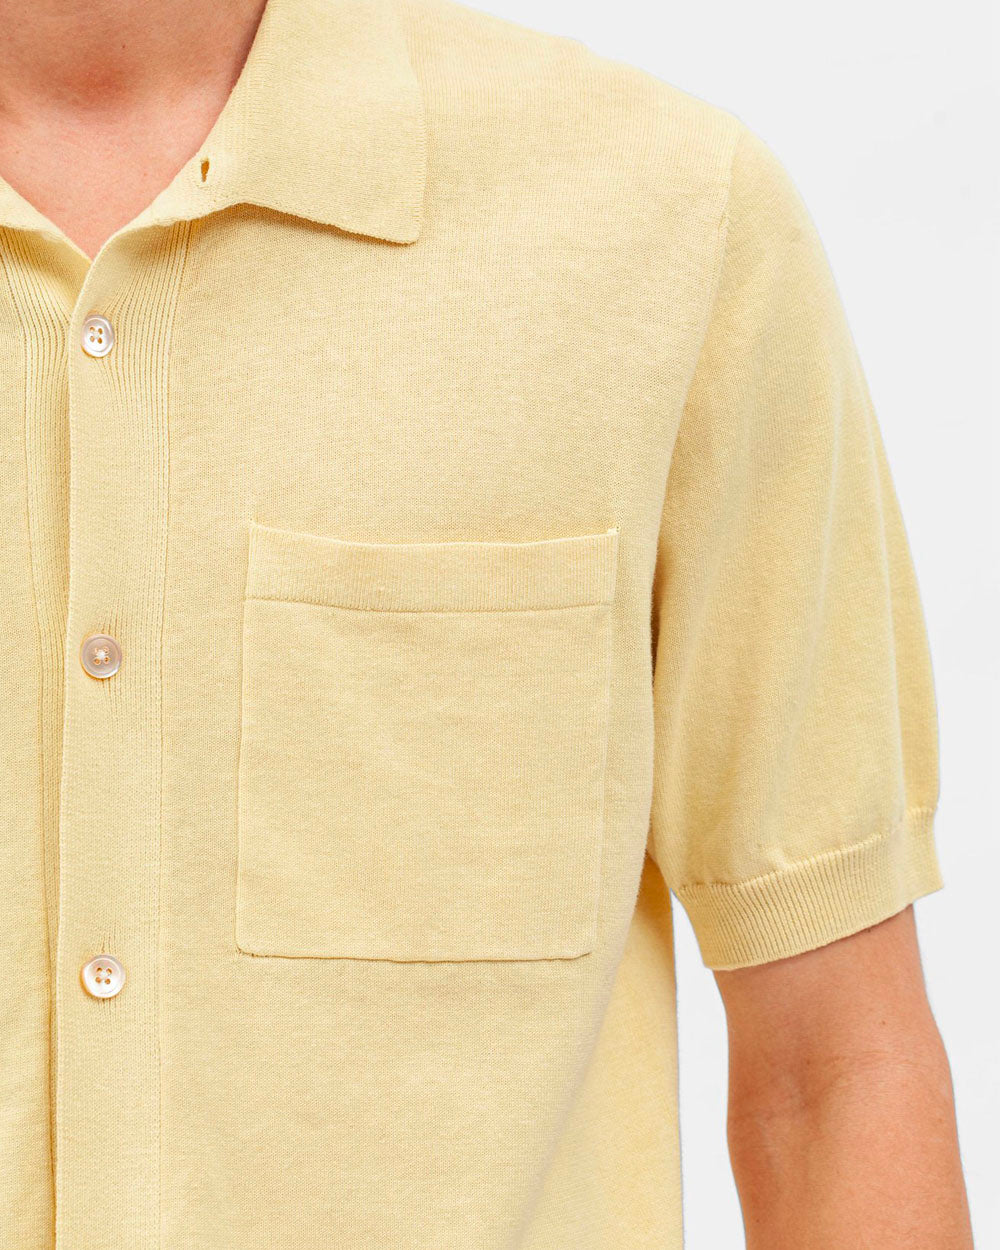 Rollo Cotton Linen SS Shirt Sunwashed Yellow